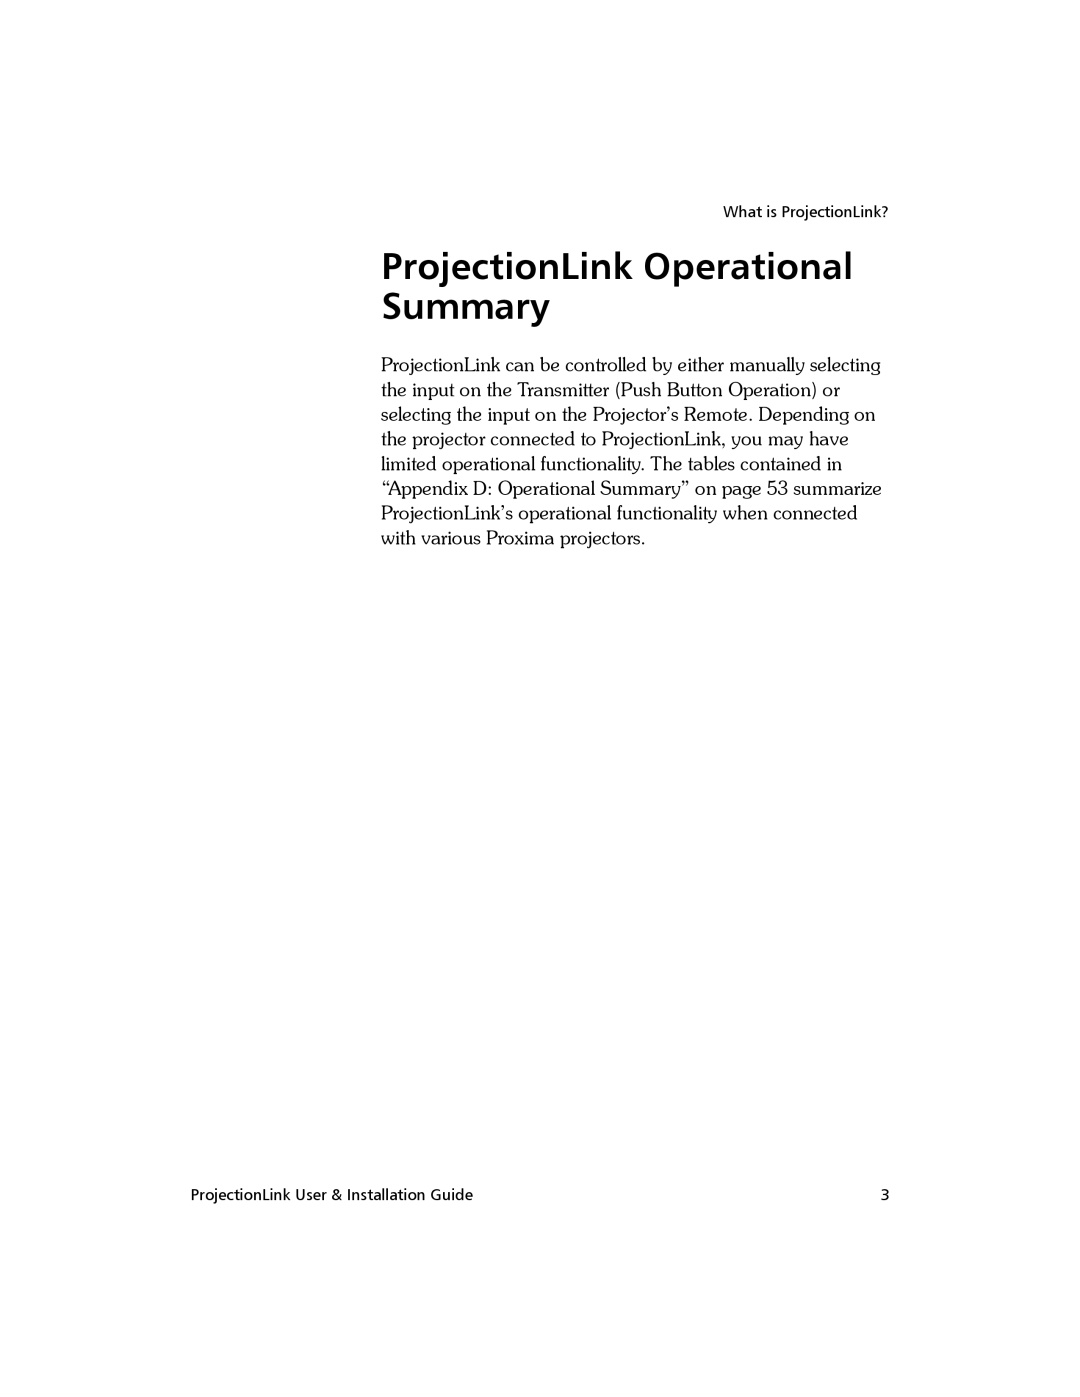 Proxima ASA PL-300E, BNDL-001 manual ProjectionLink Operational Summary 